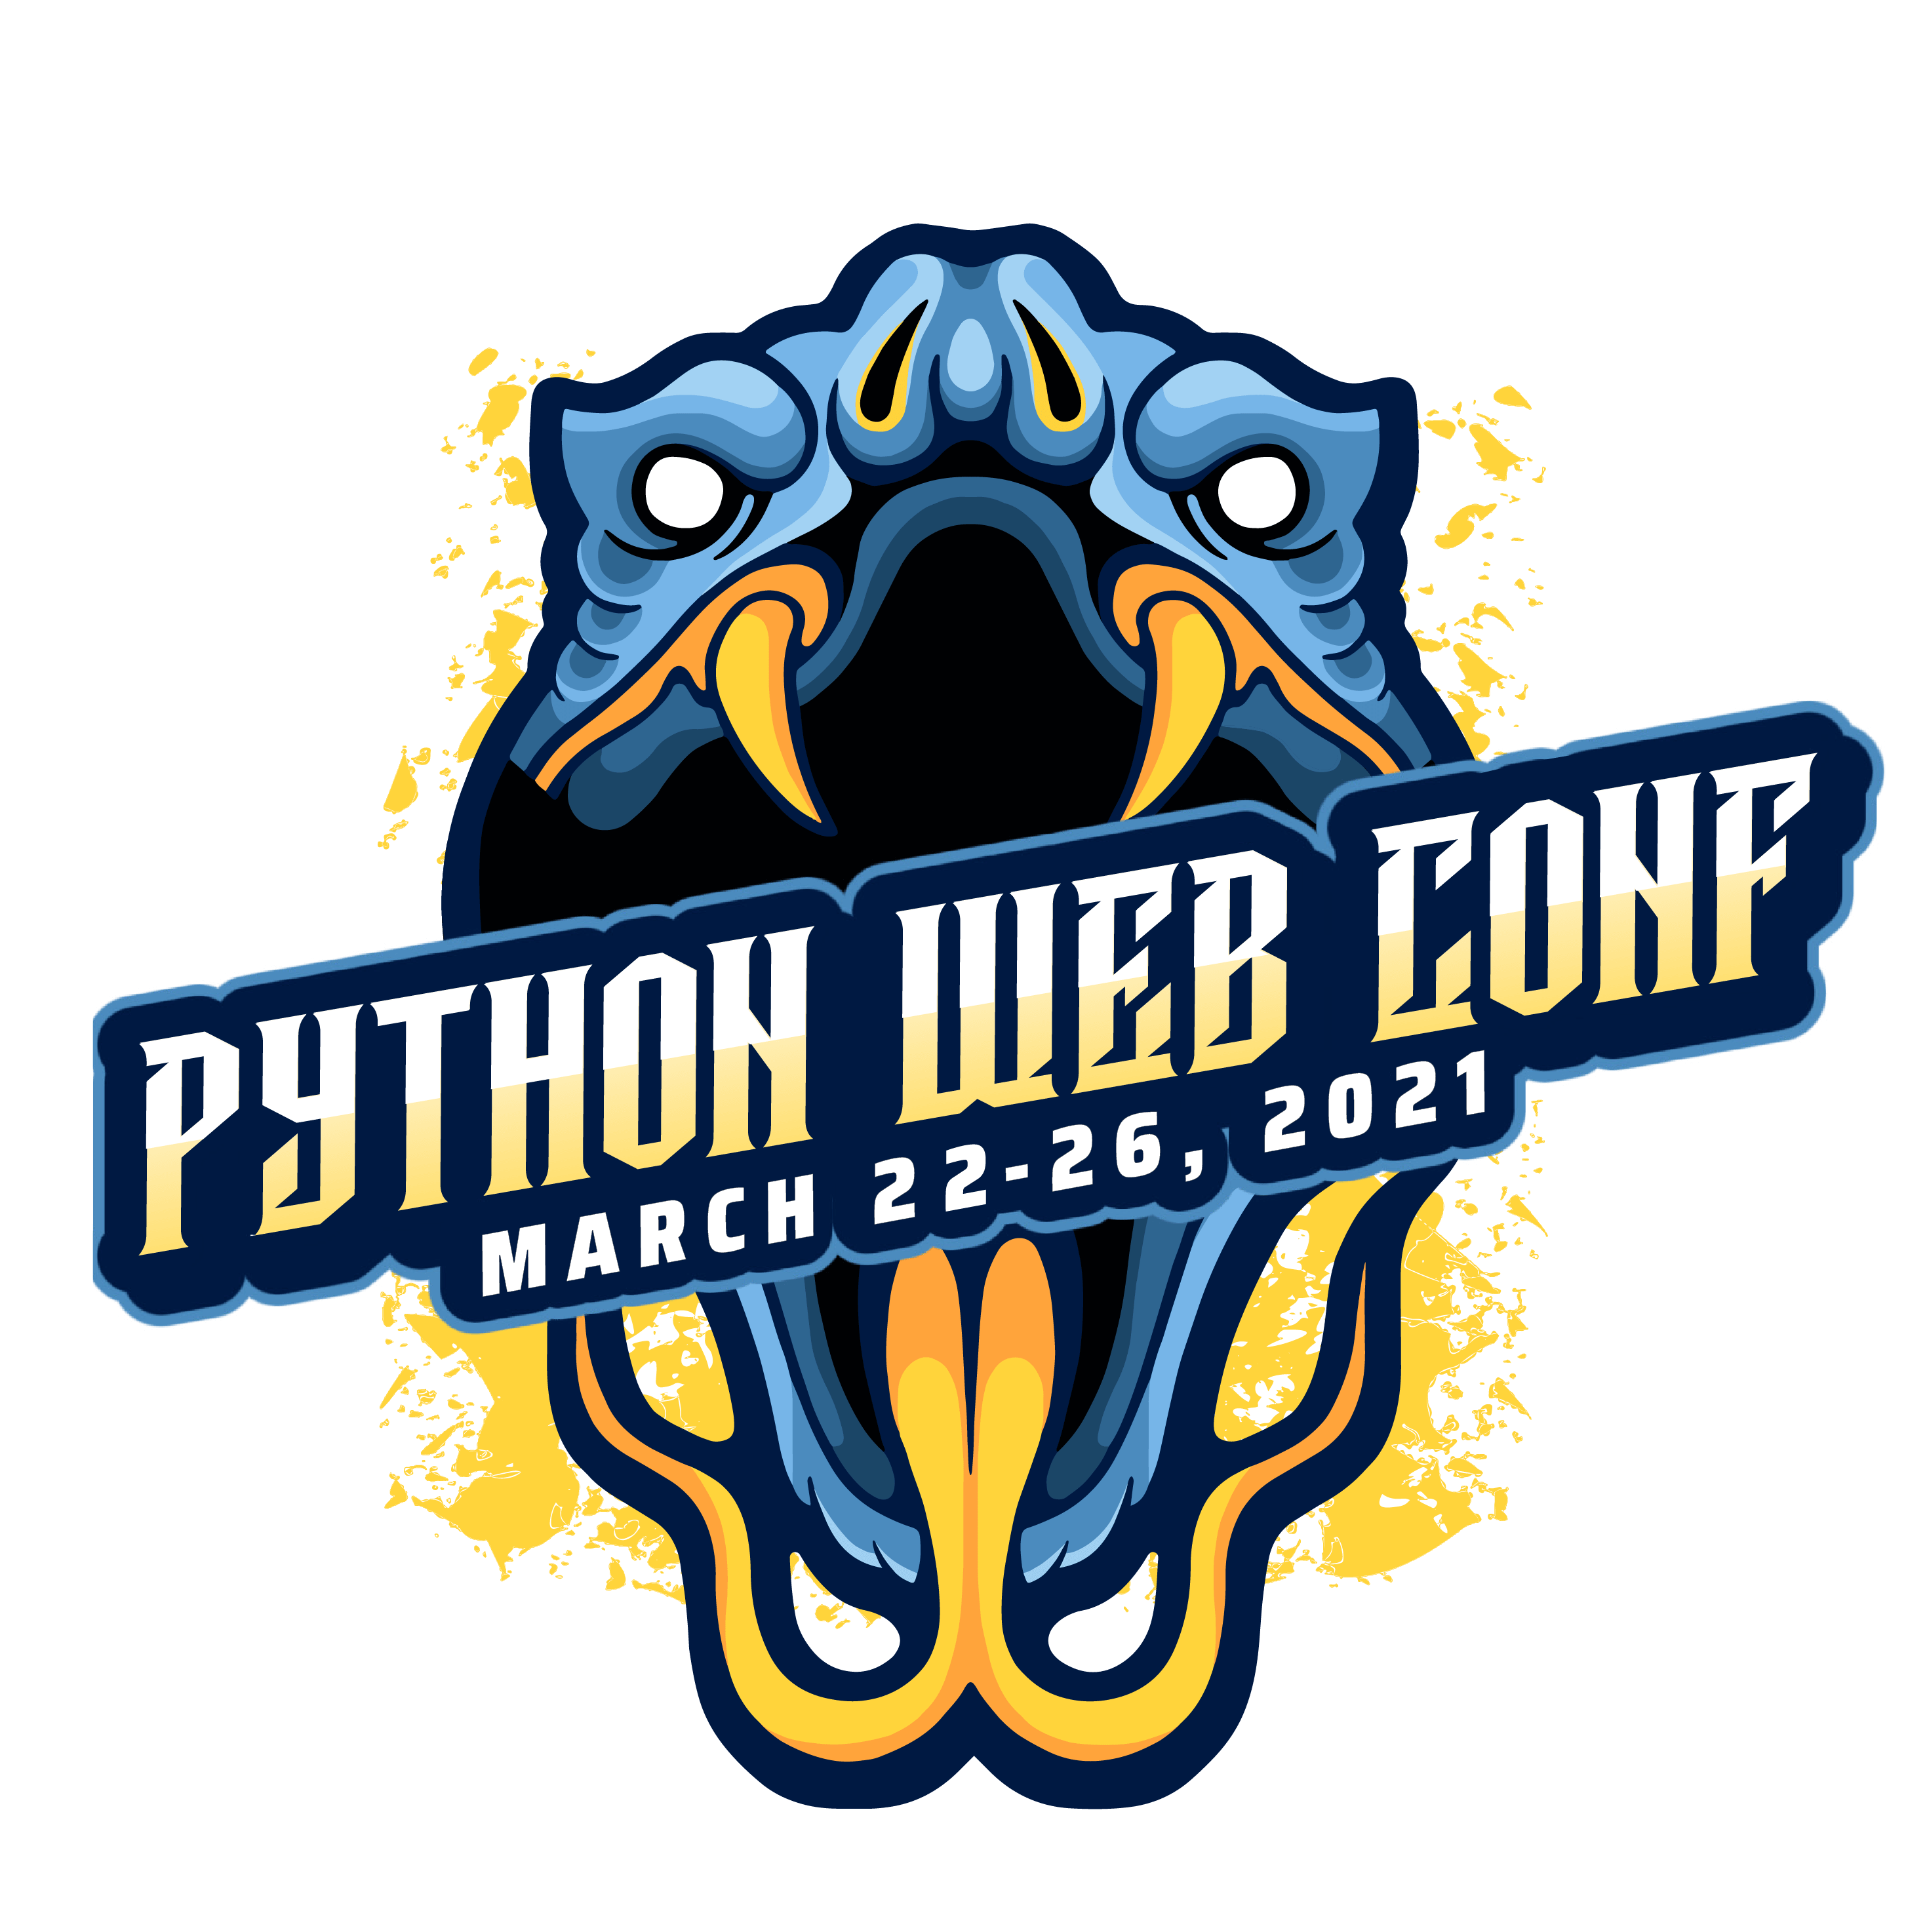 Python Web Conference logo